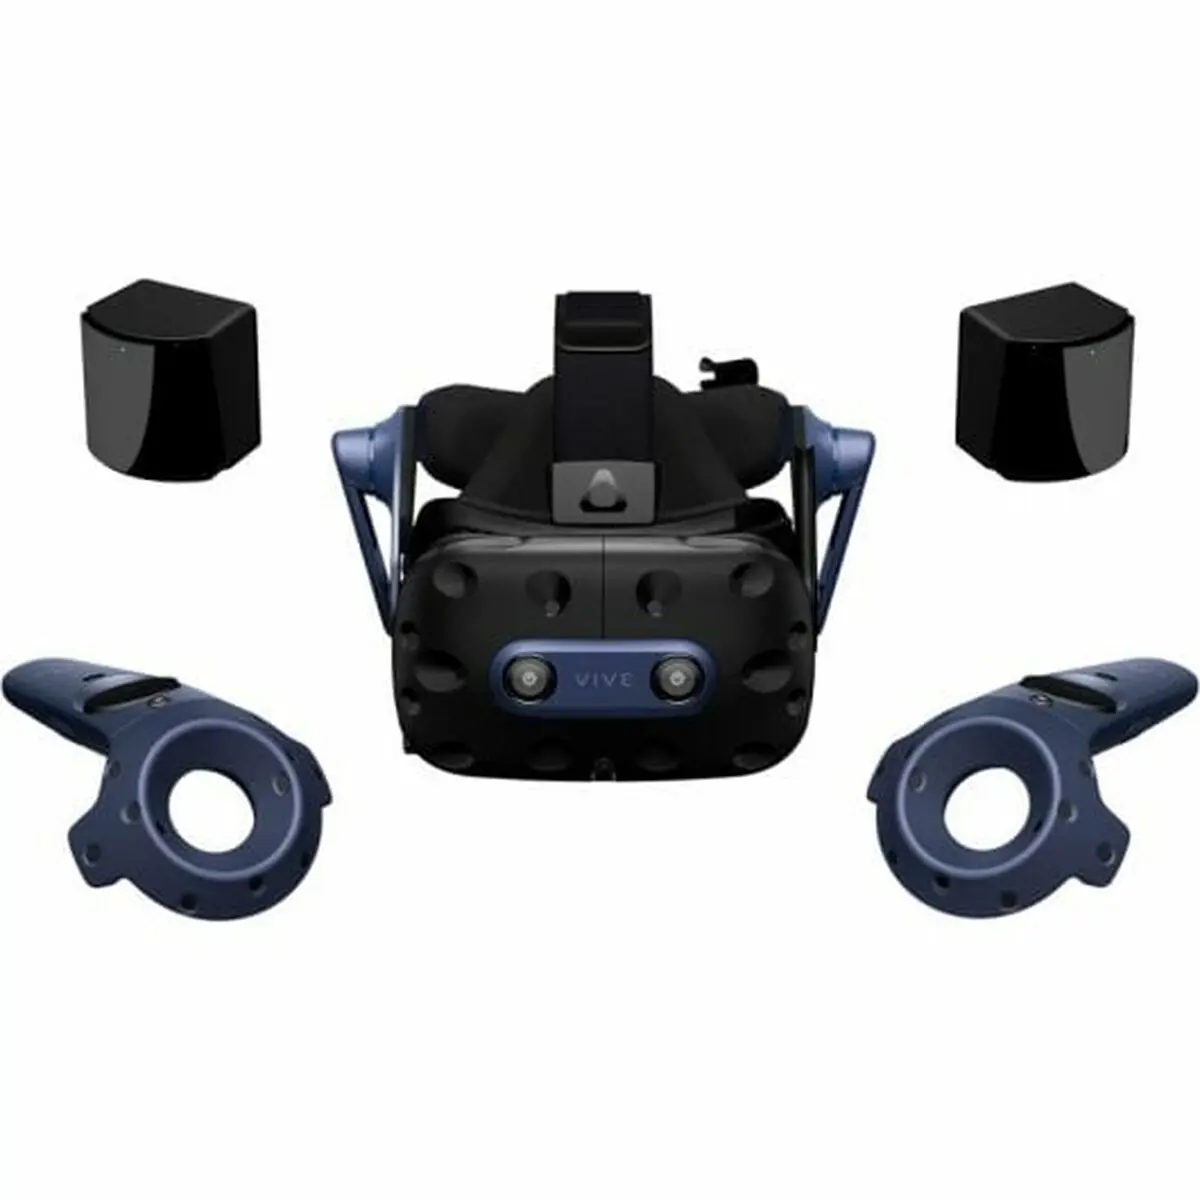 Occhiali di Realtà Virtuale HTC